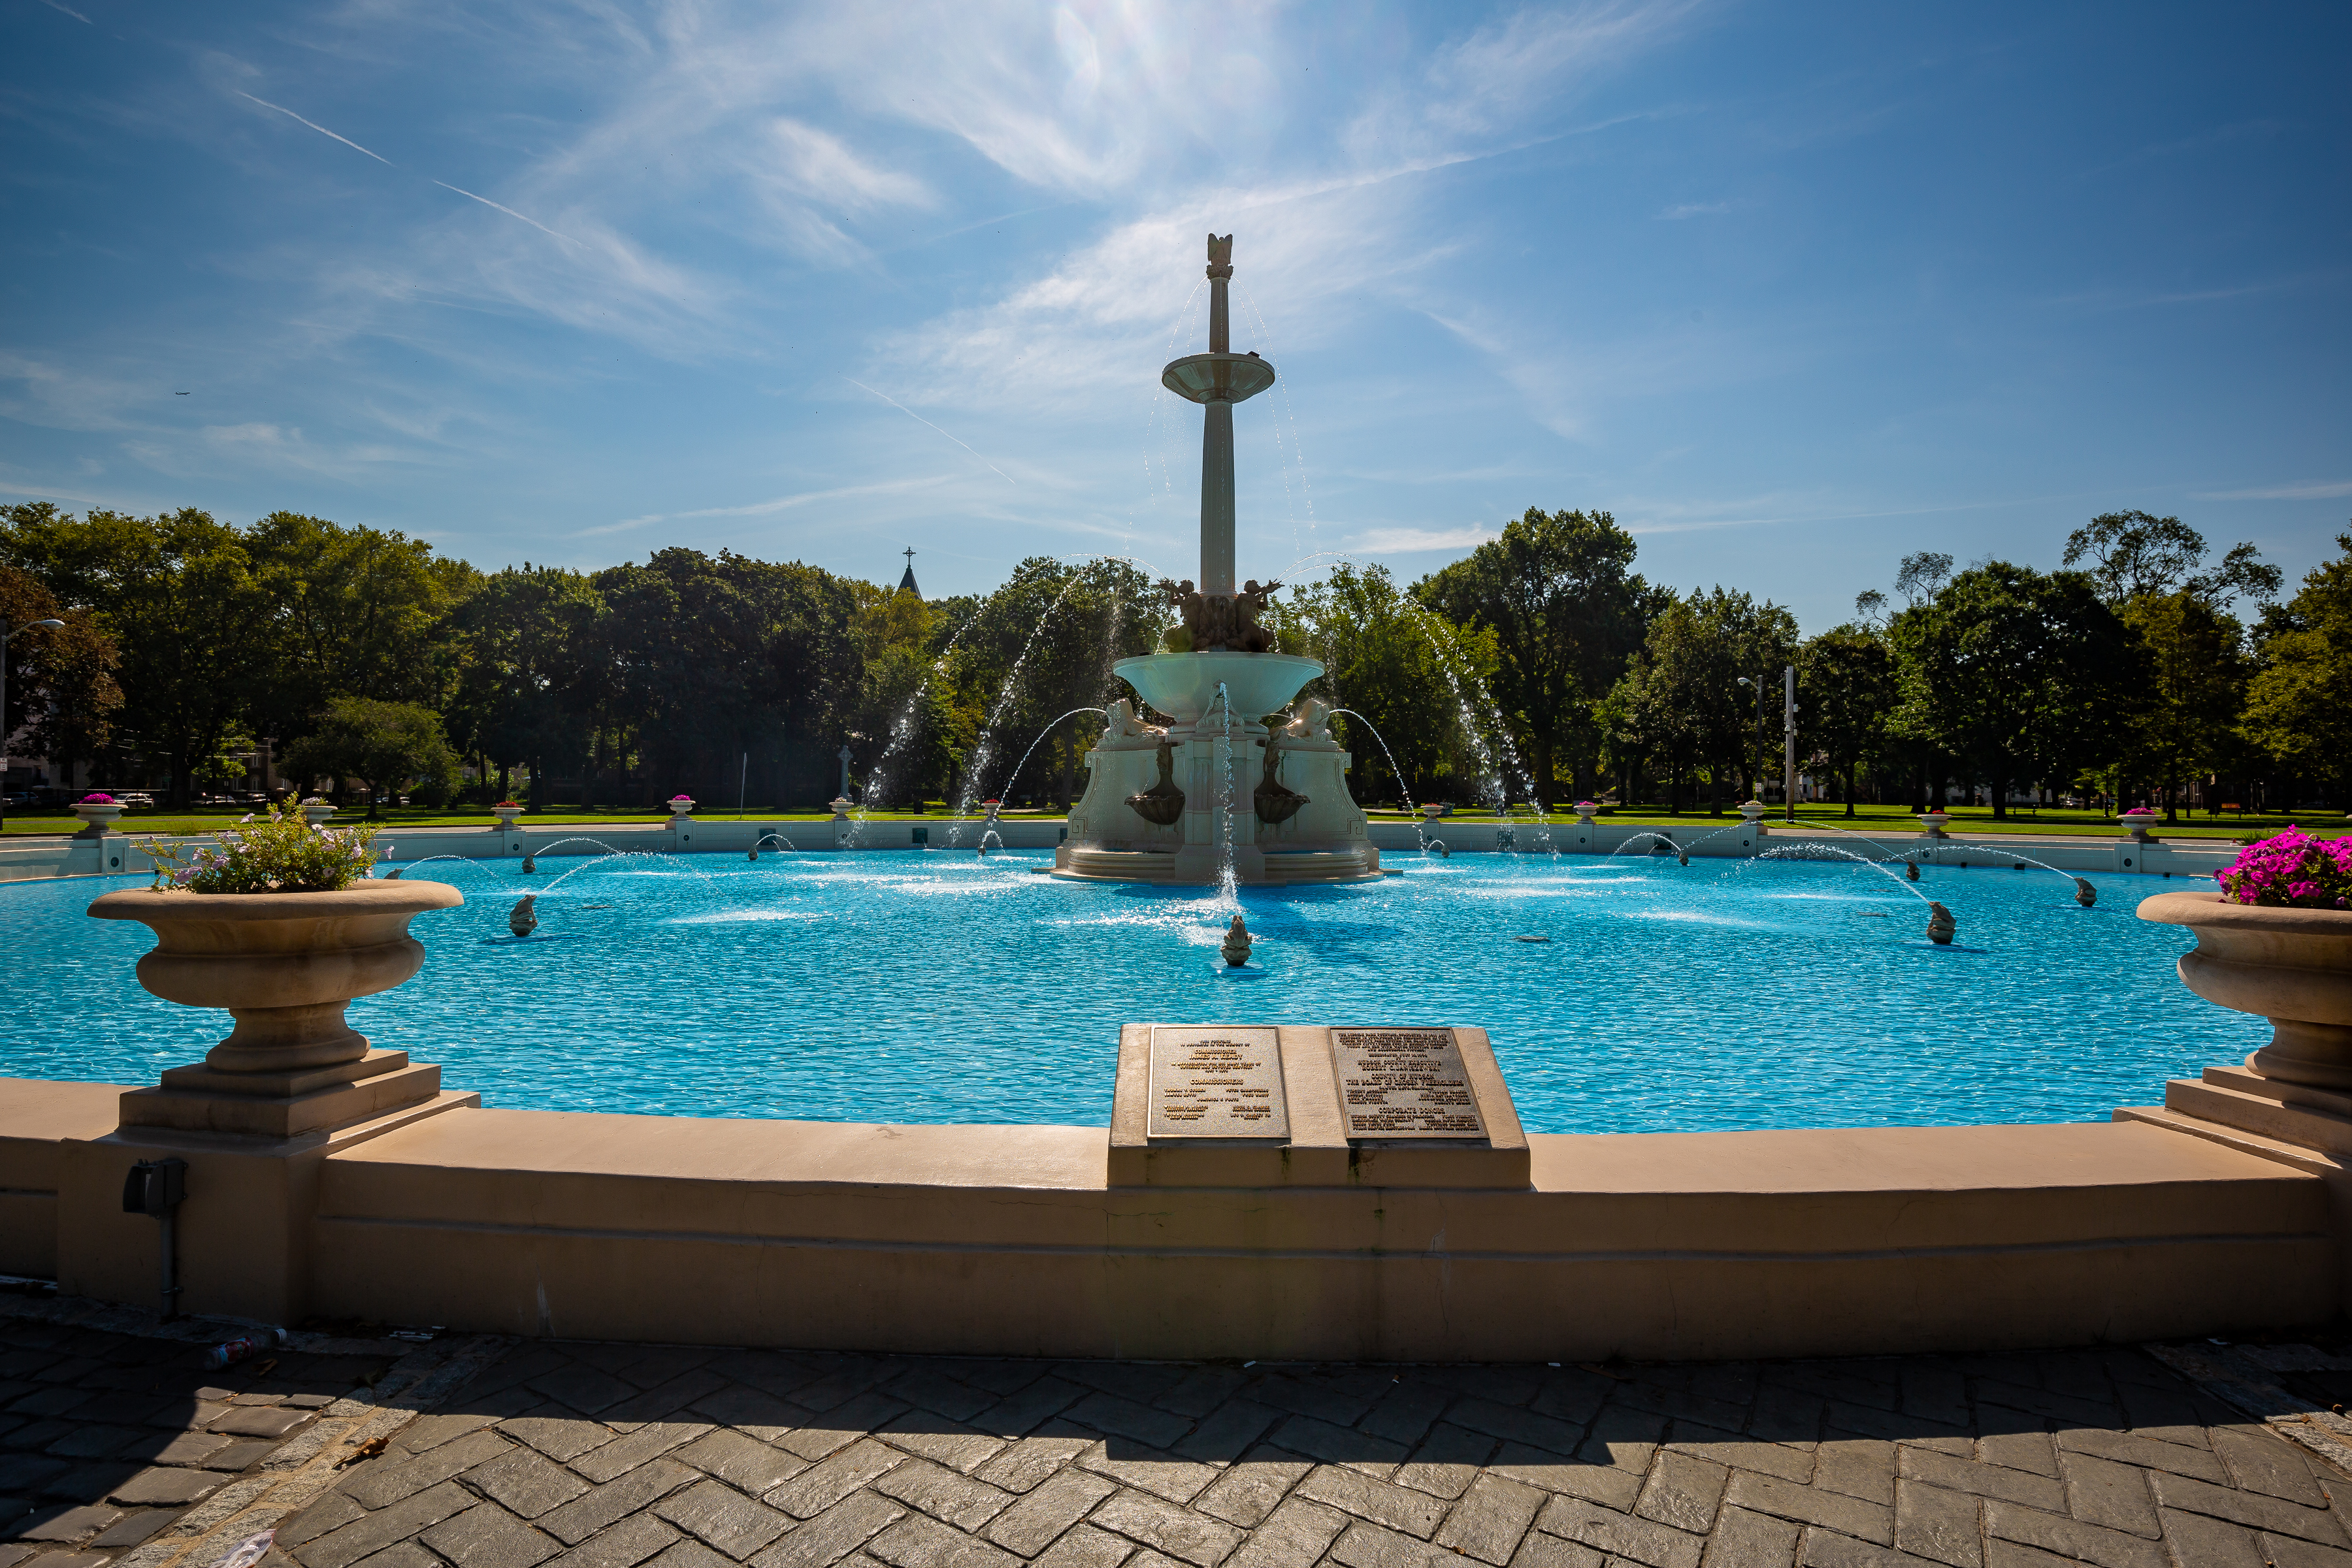 Lincoln Park Fountain - Hudson County